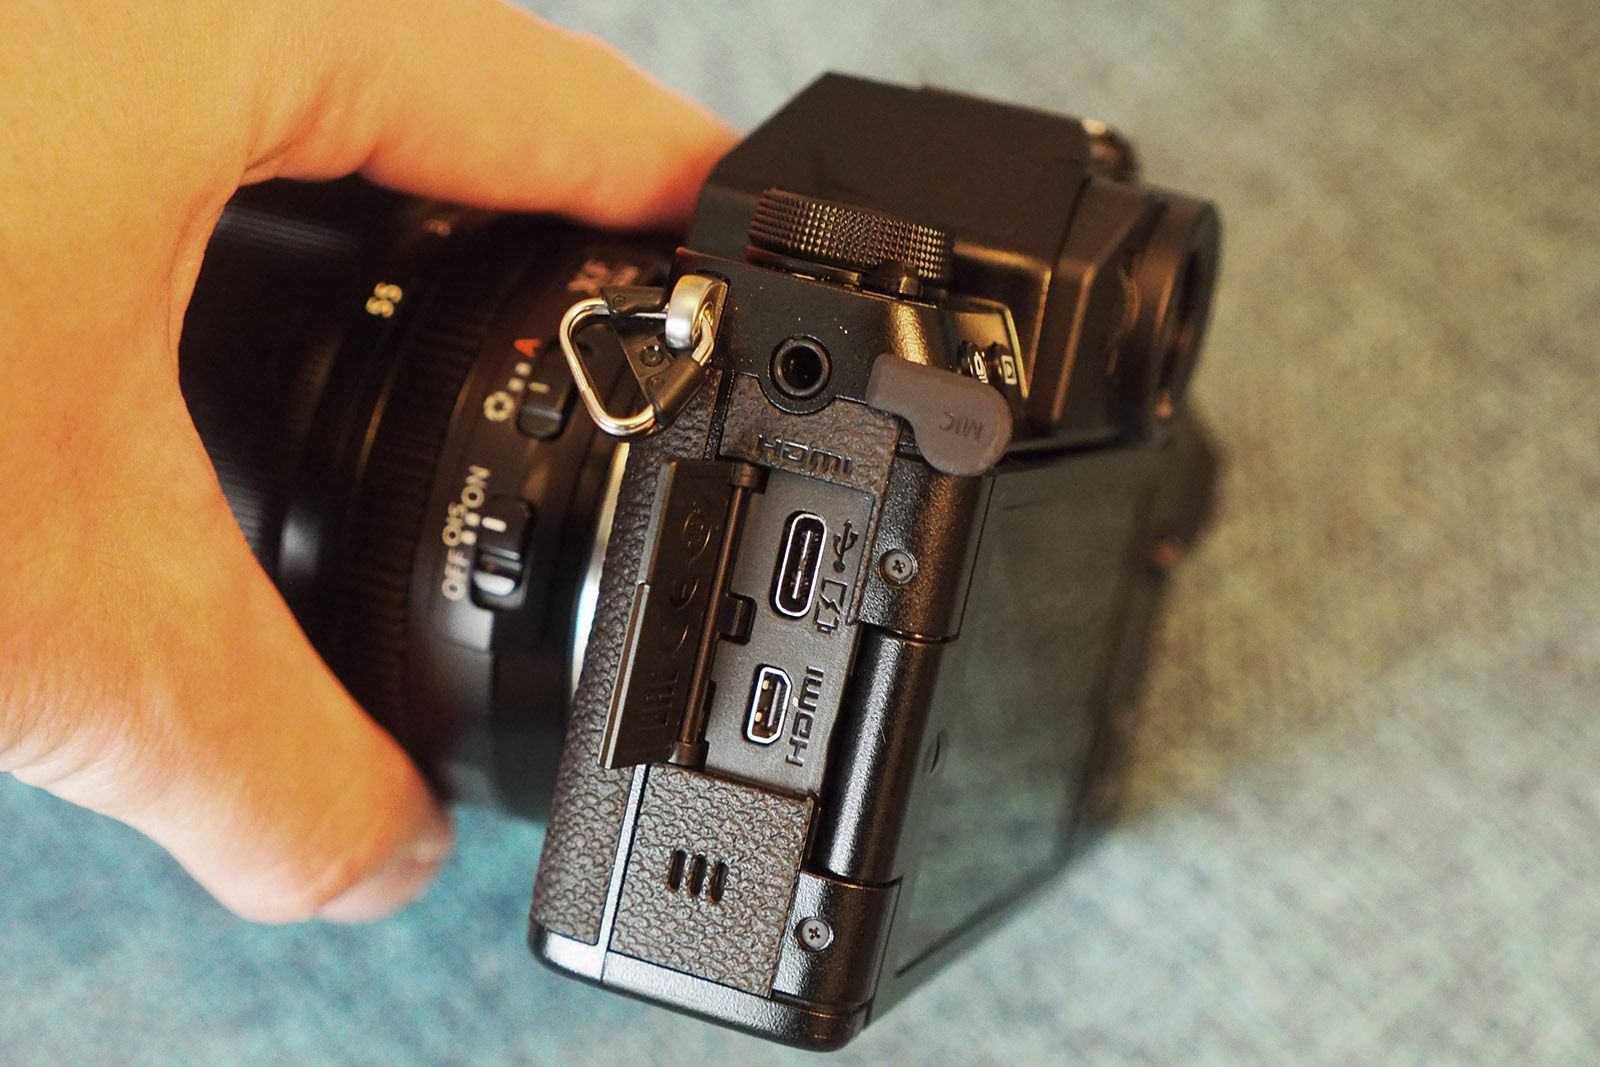 Fujifilm X-S10 review photo 3